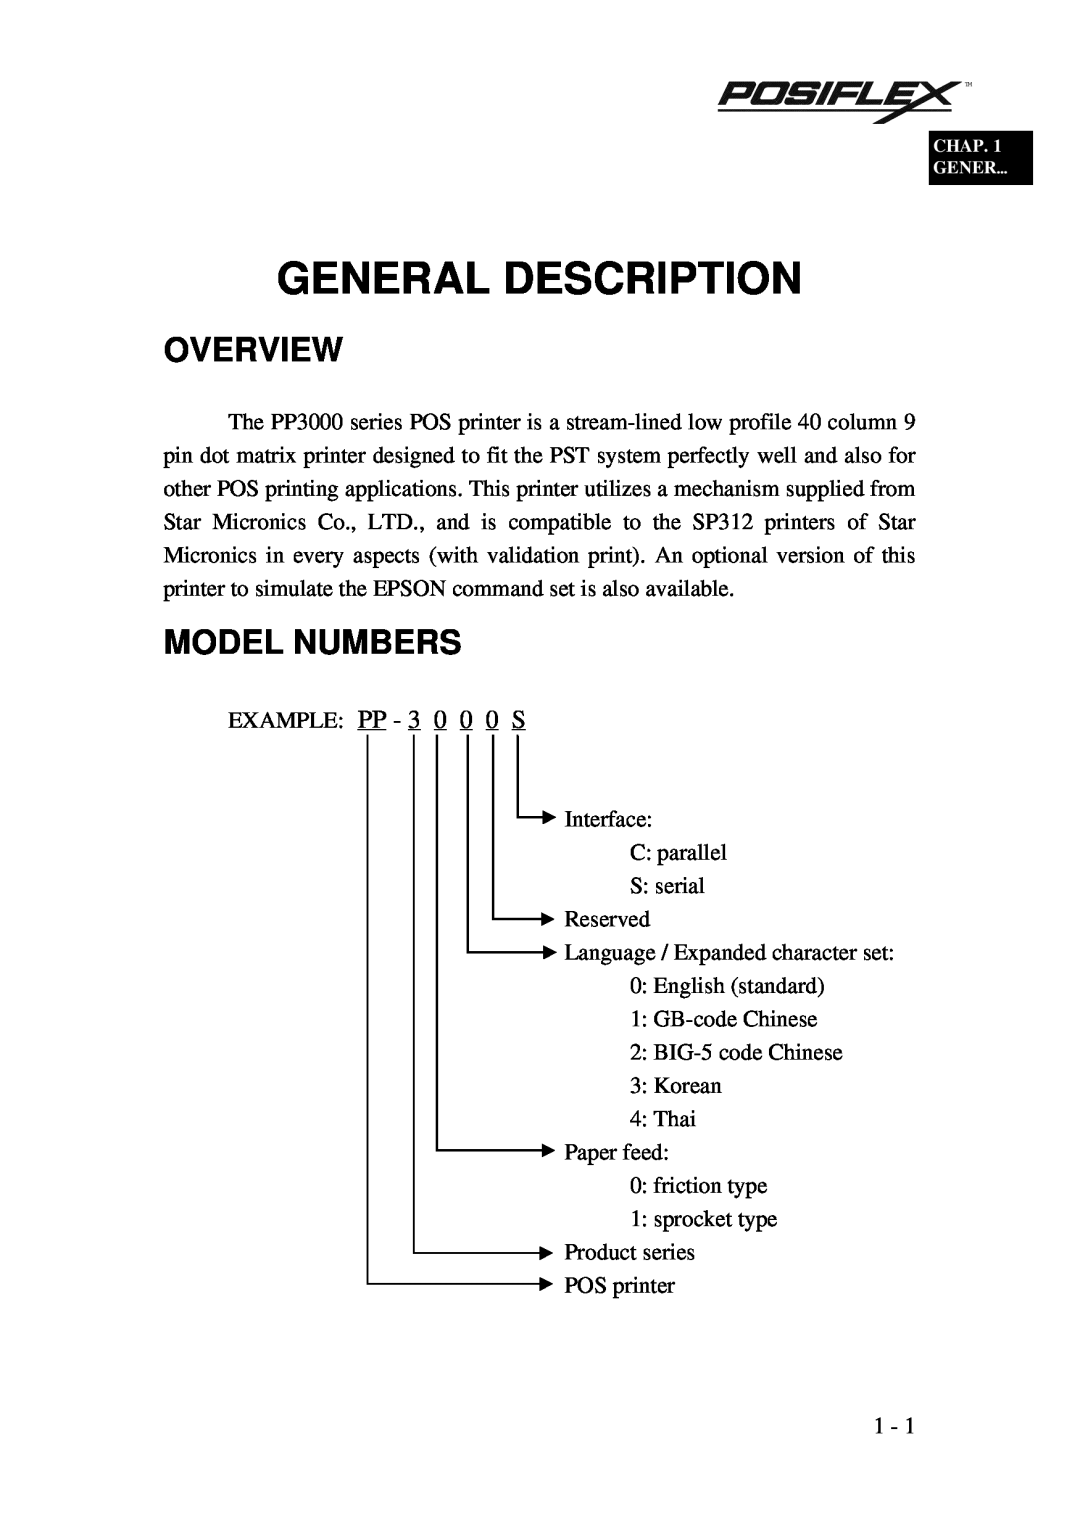 POSIFLEX Business Machines PP3000 manual General Description, Overview, Model Numbers, EXAMPLE PP - 3 0 0 0 S, Chap Gener… 